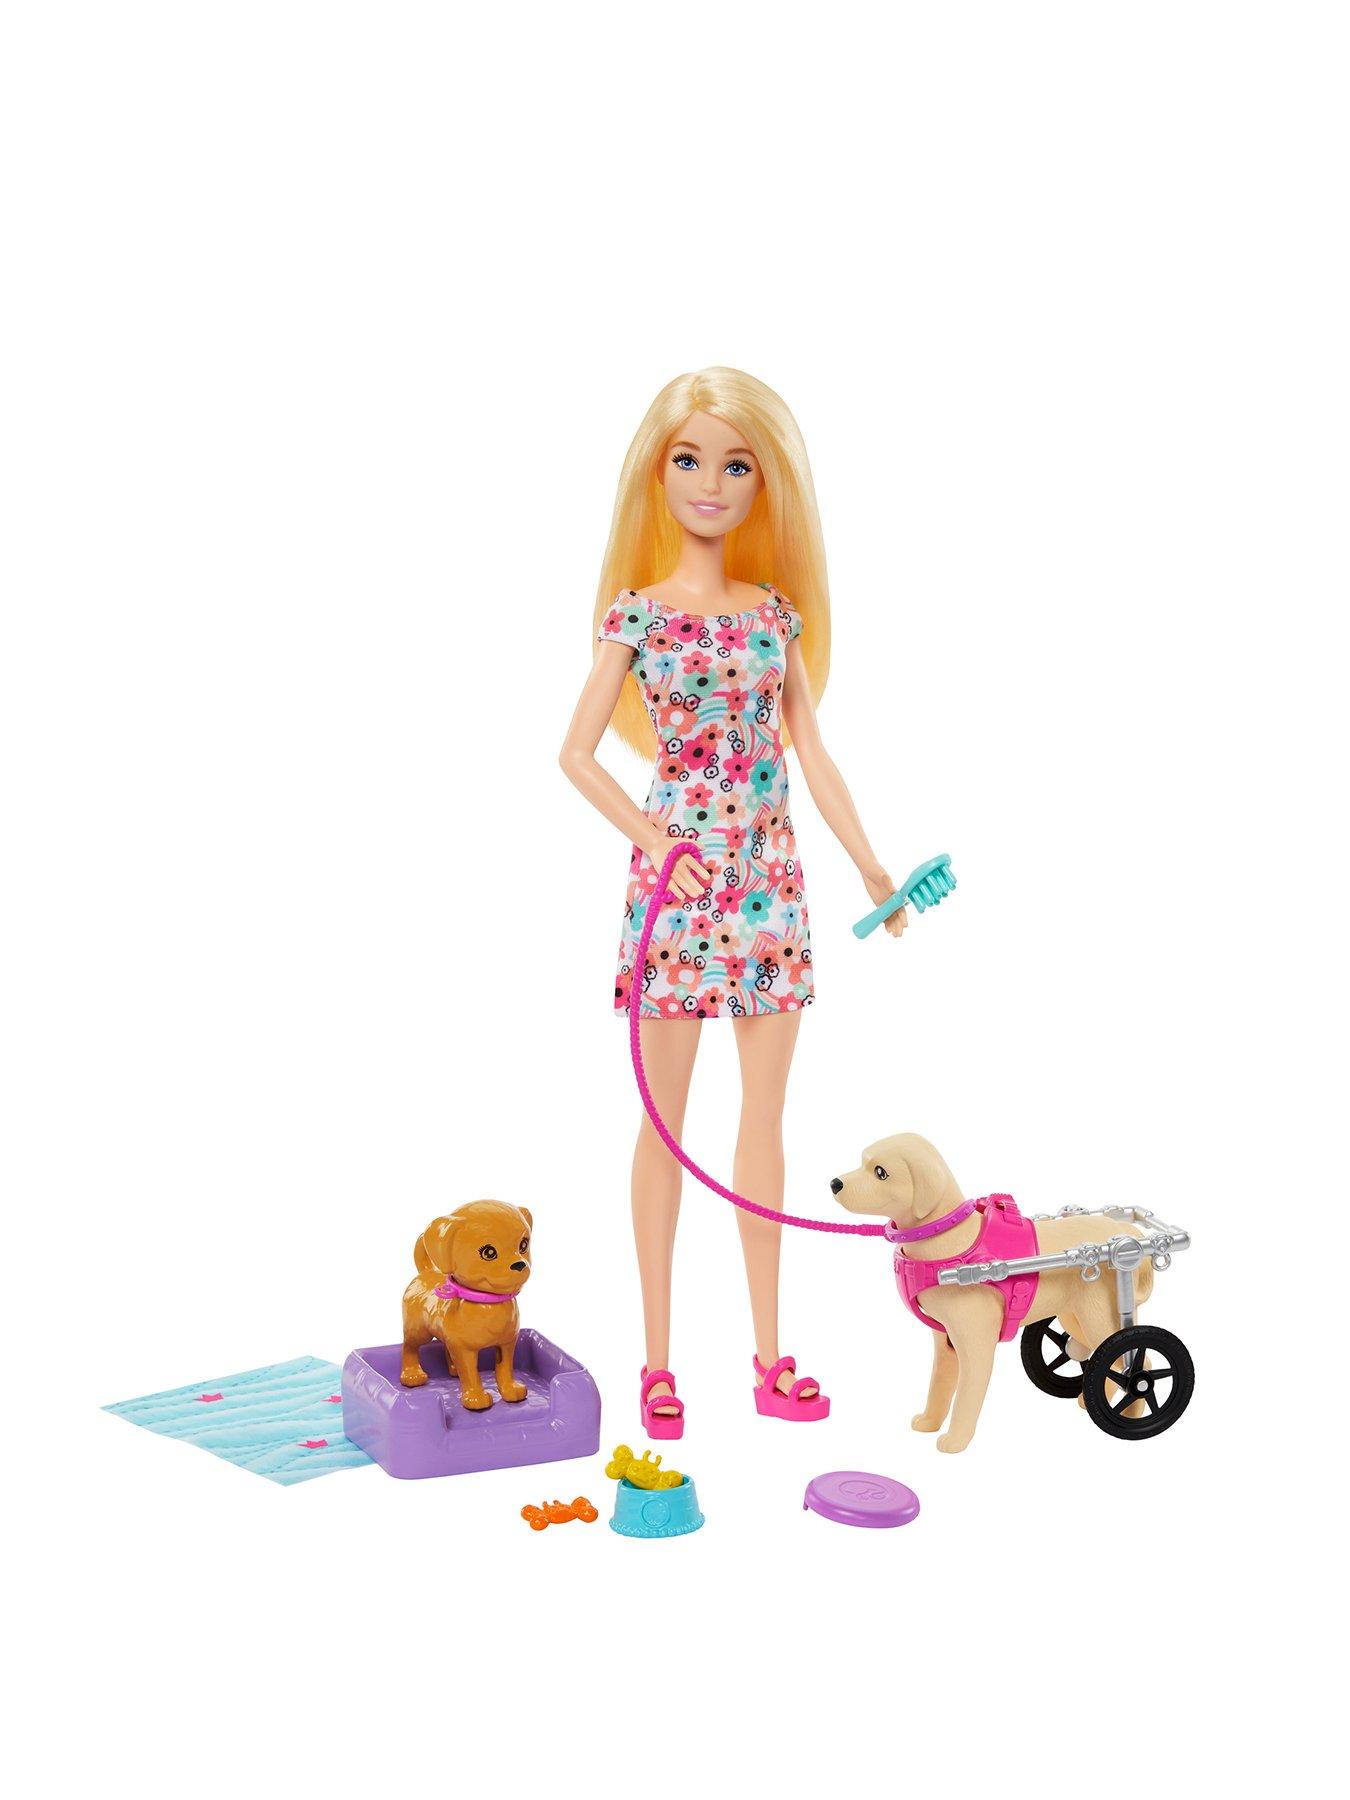 Barbie Fashionistas Ultimate Closet Accessory Playset